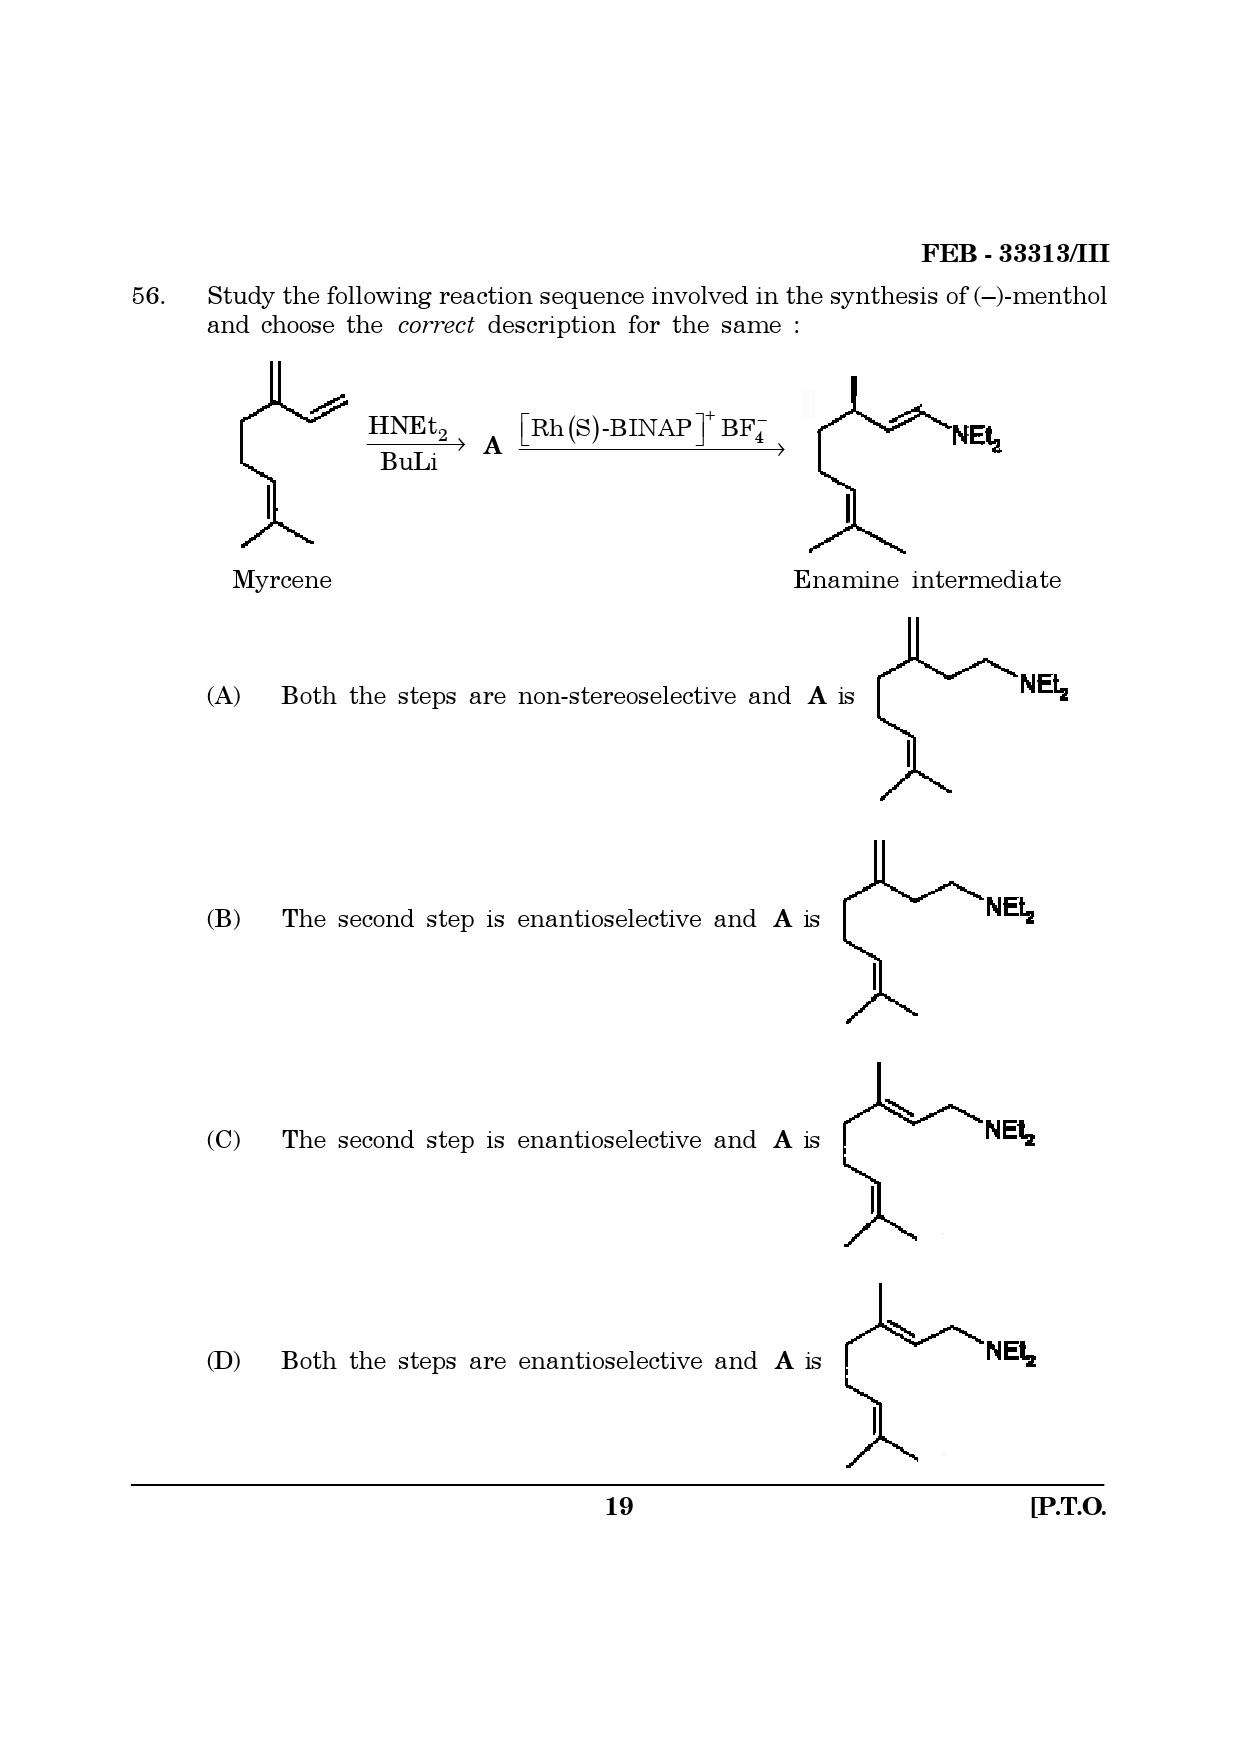 Maharashtra SET Chemical Sciences Question Paper III February 2013 19